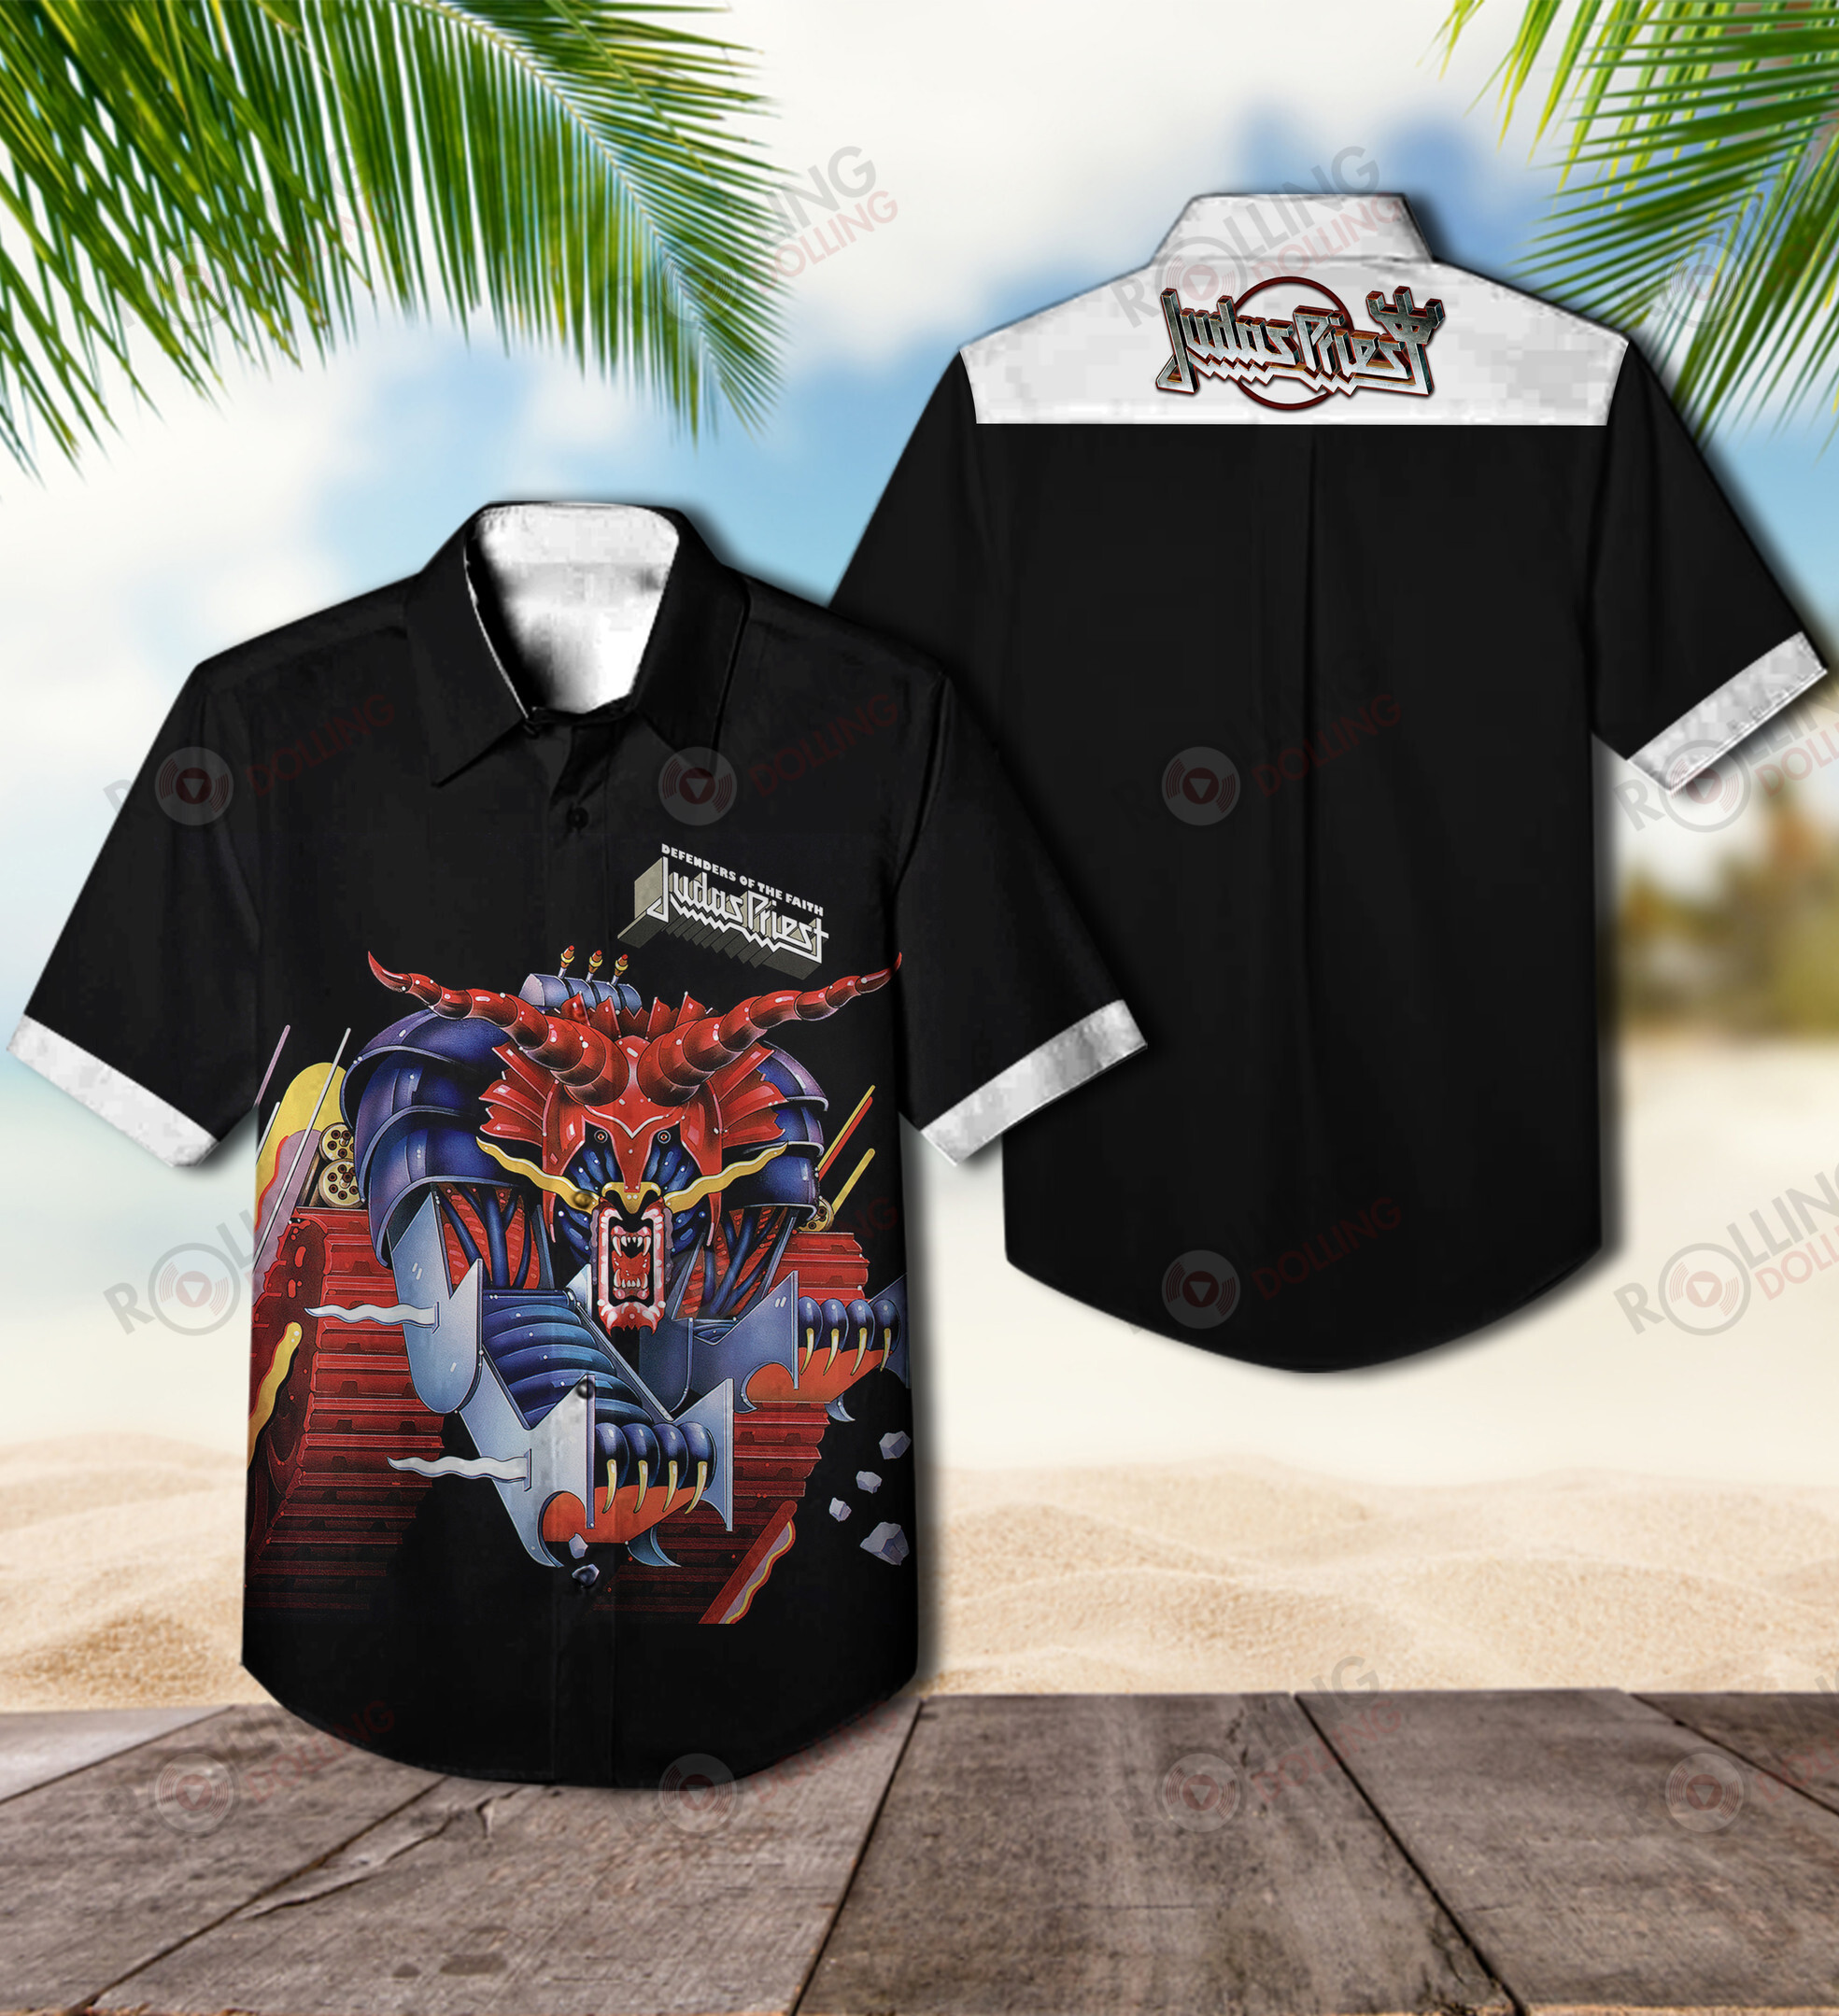 Regardless of their style, you will feel comfortable wearing Hawaiian Shirt 11